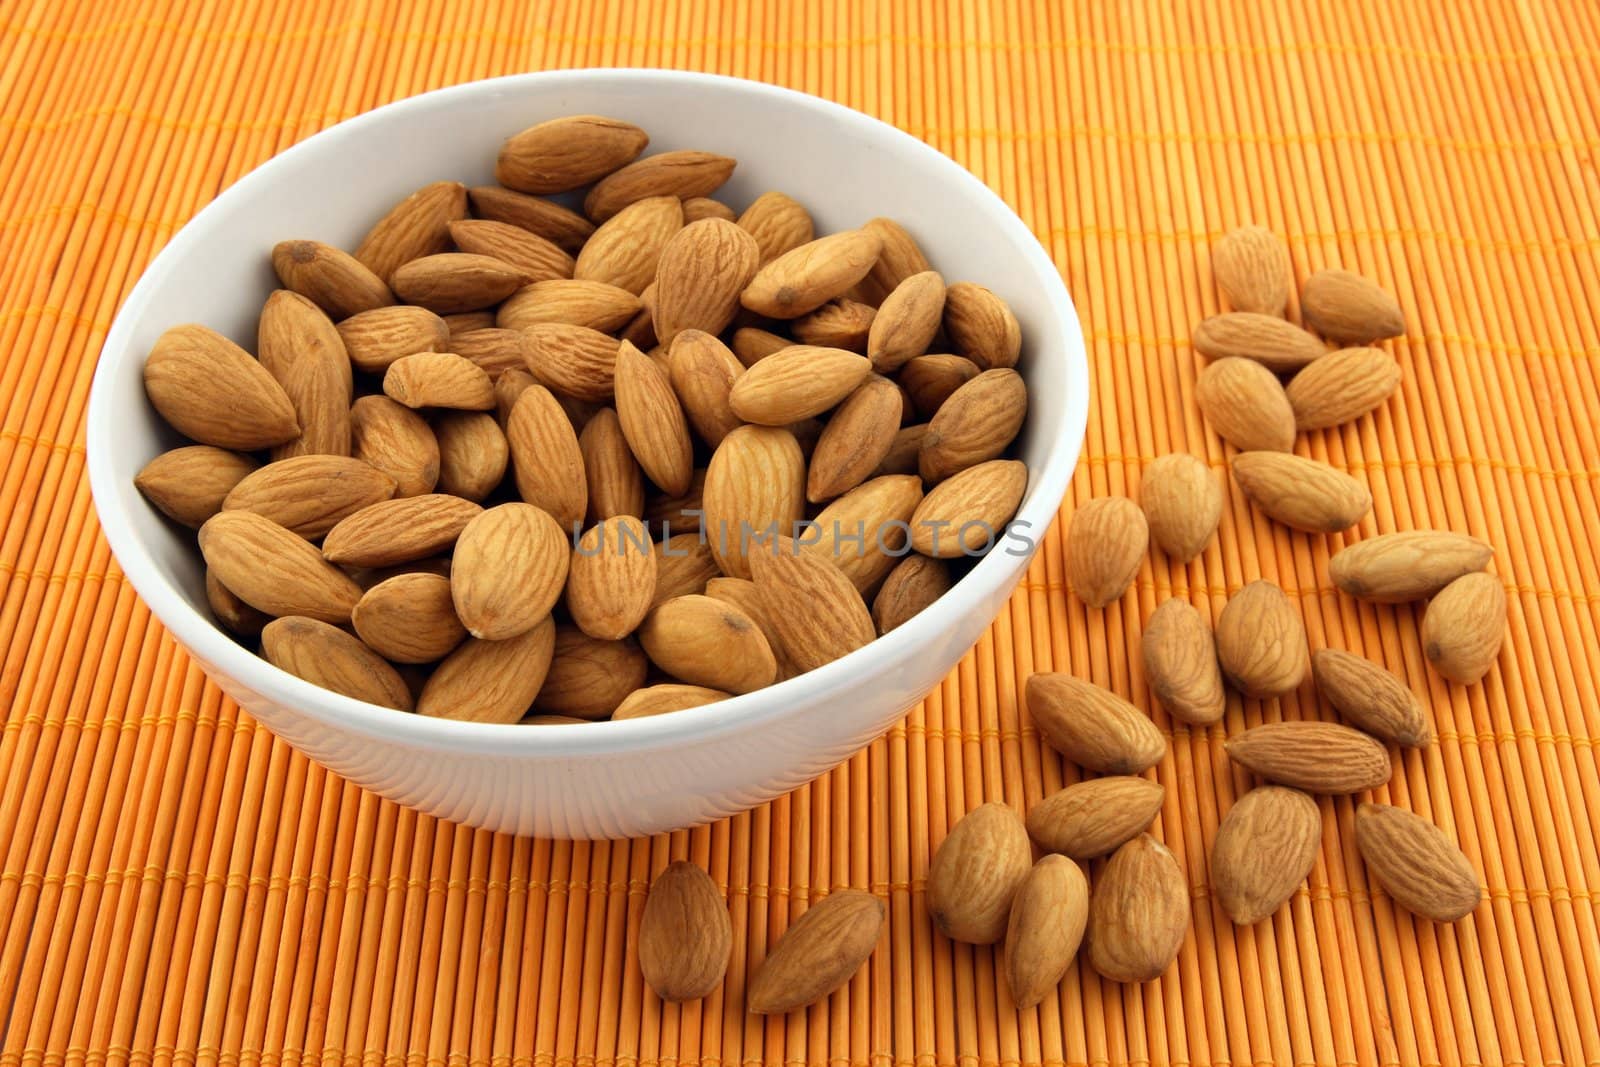 Bowl full of fresh almonds on warm orange background.